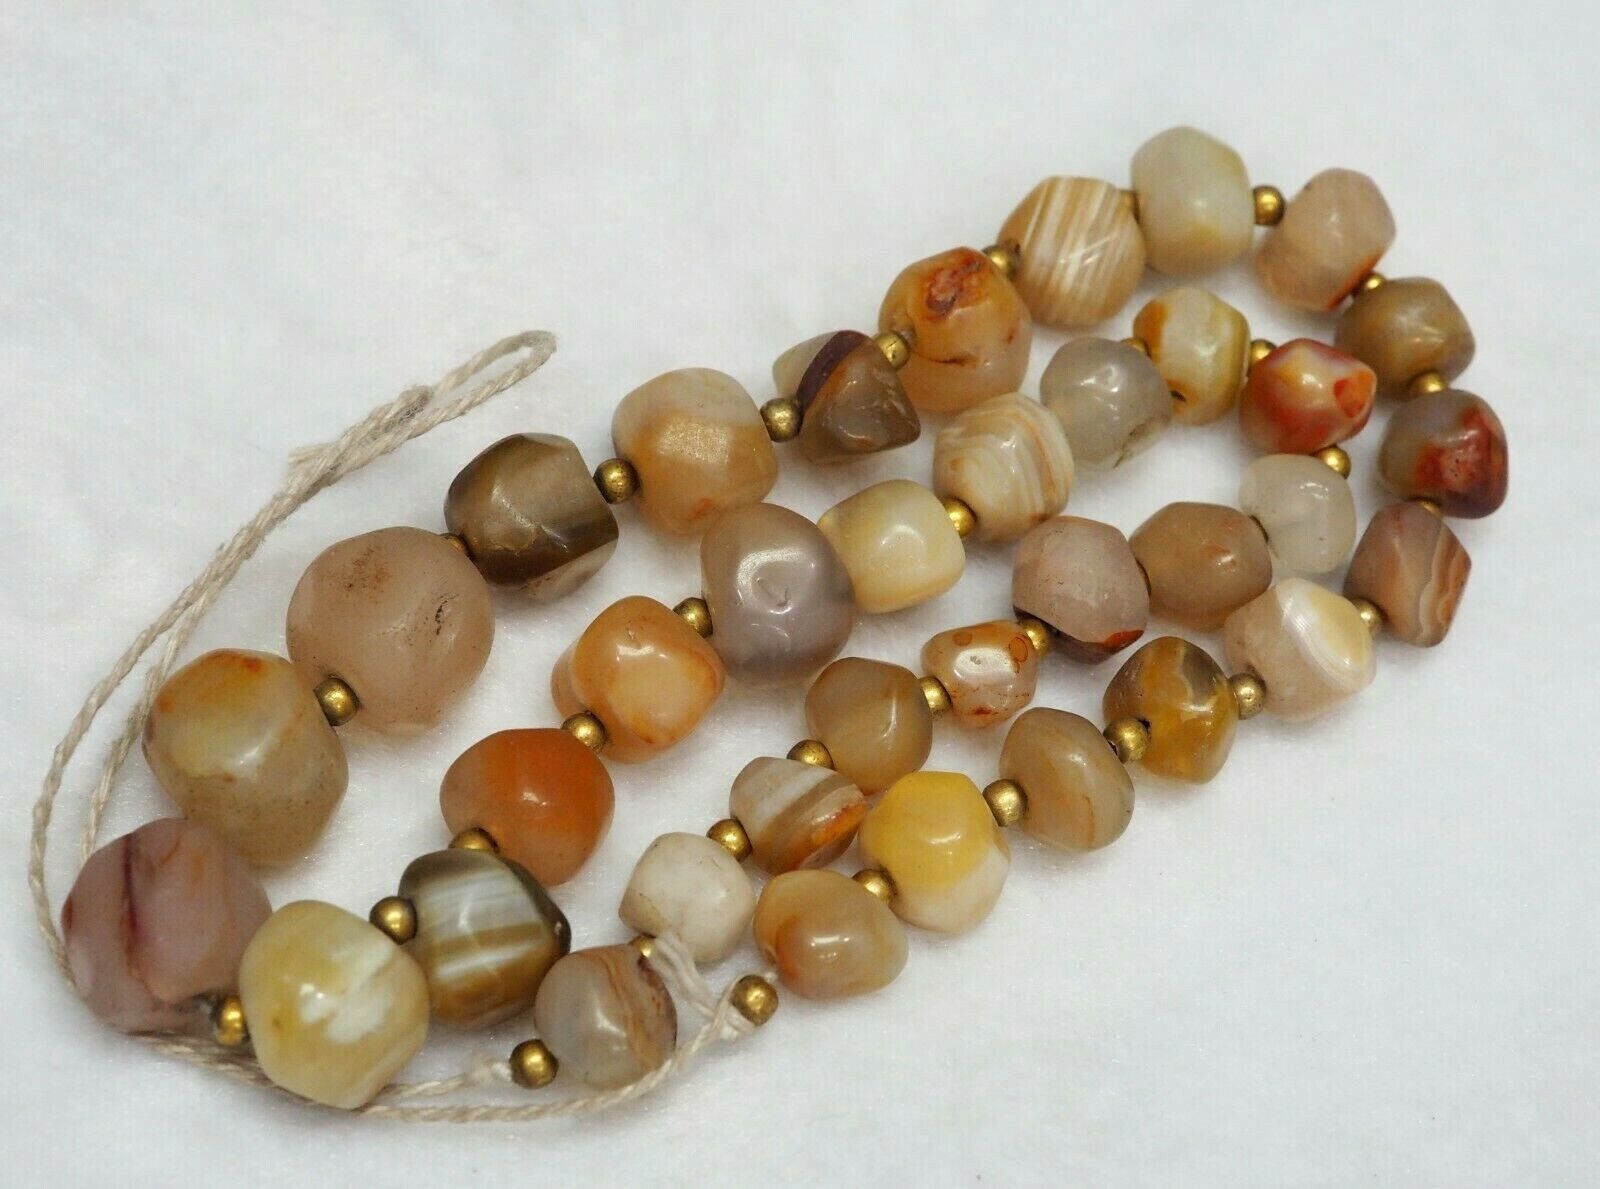 Antique Pakistan Collectible Mixed Agate Carnelian Beads Circa 1800s Necklace